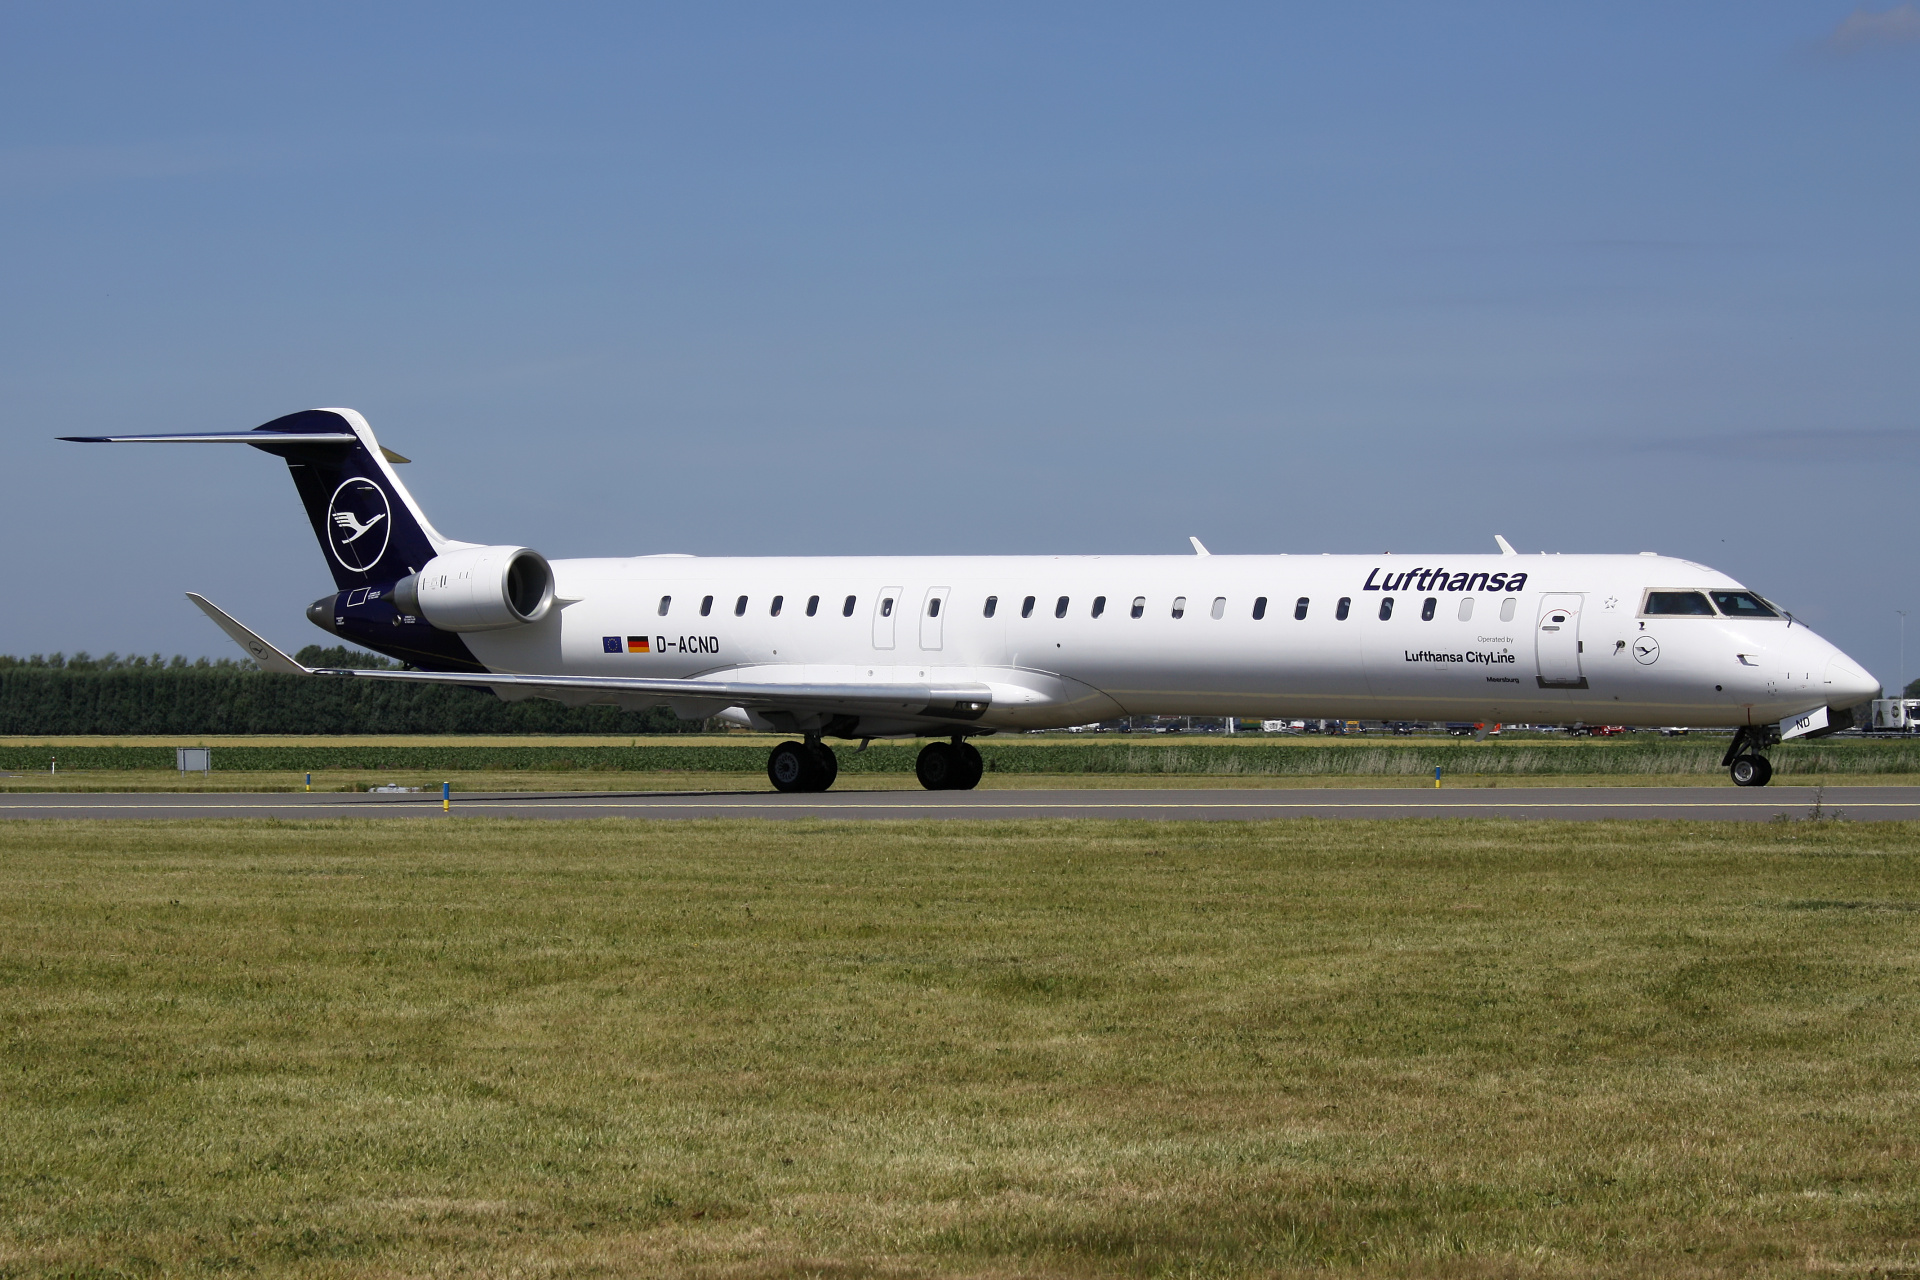 D-ACND, Lufthansa (Lufthansa CityLine) (Aircraft » Schiphol Spotting » Mitsubishi CL-600 Regional Jet » CRJ-900)